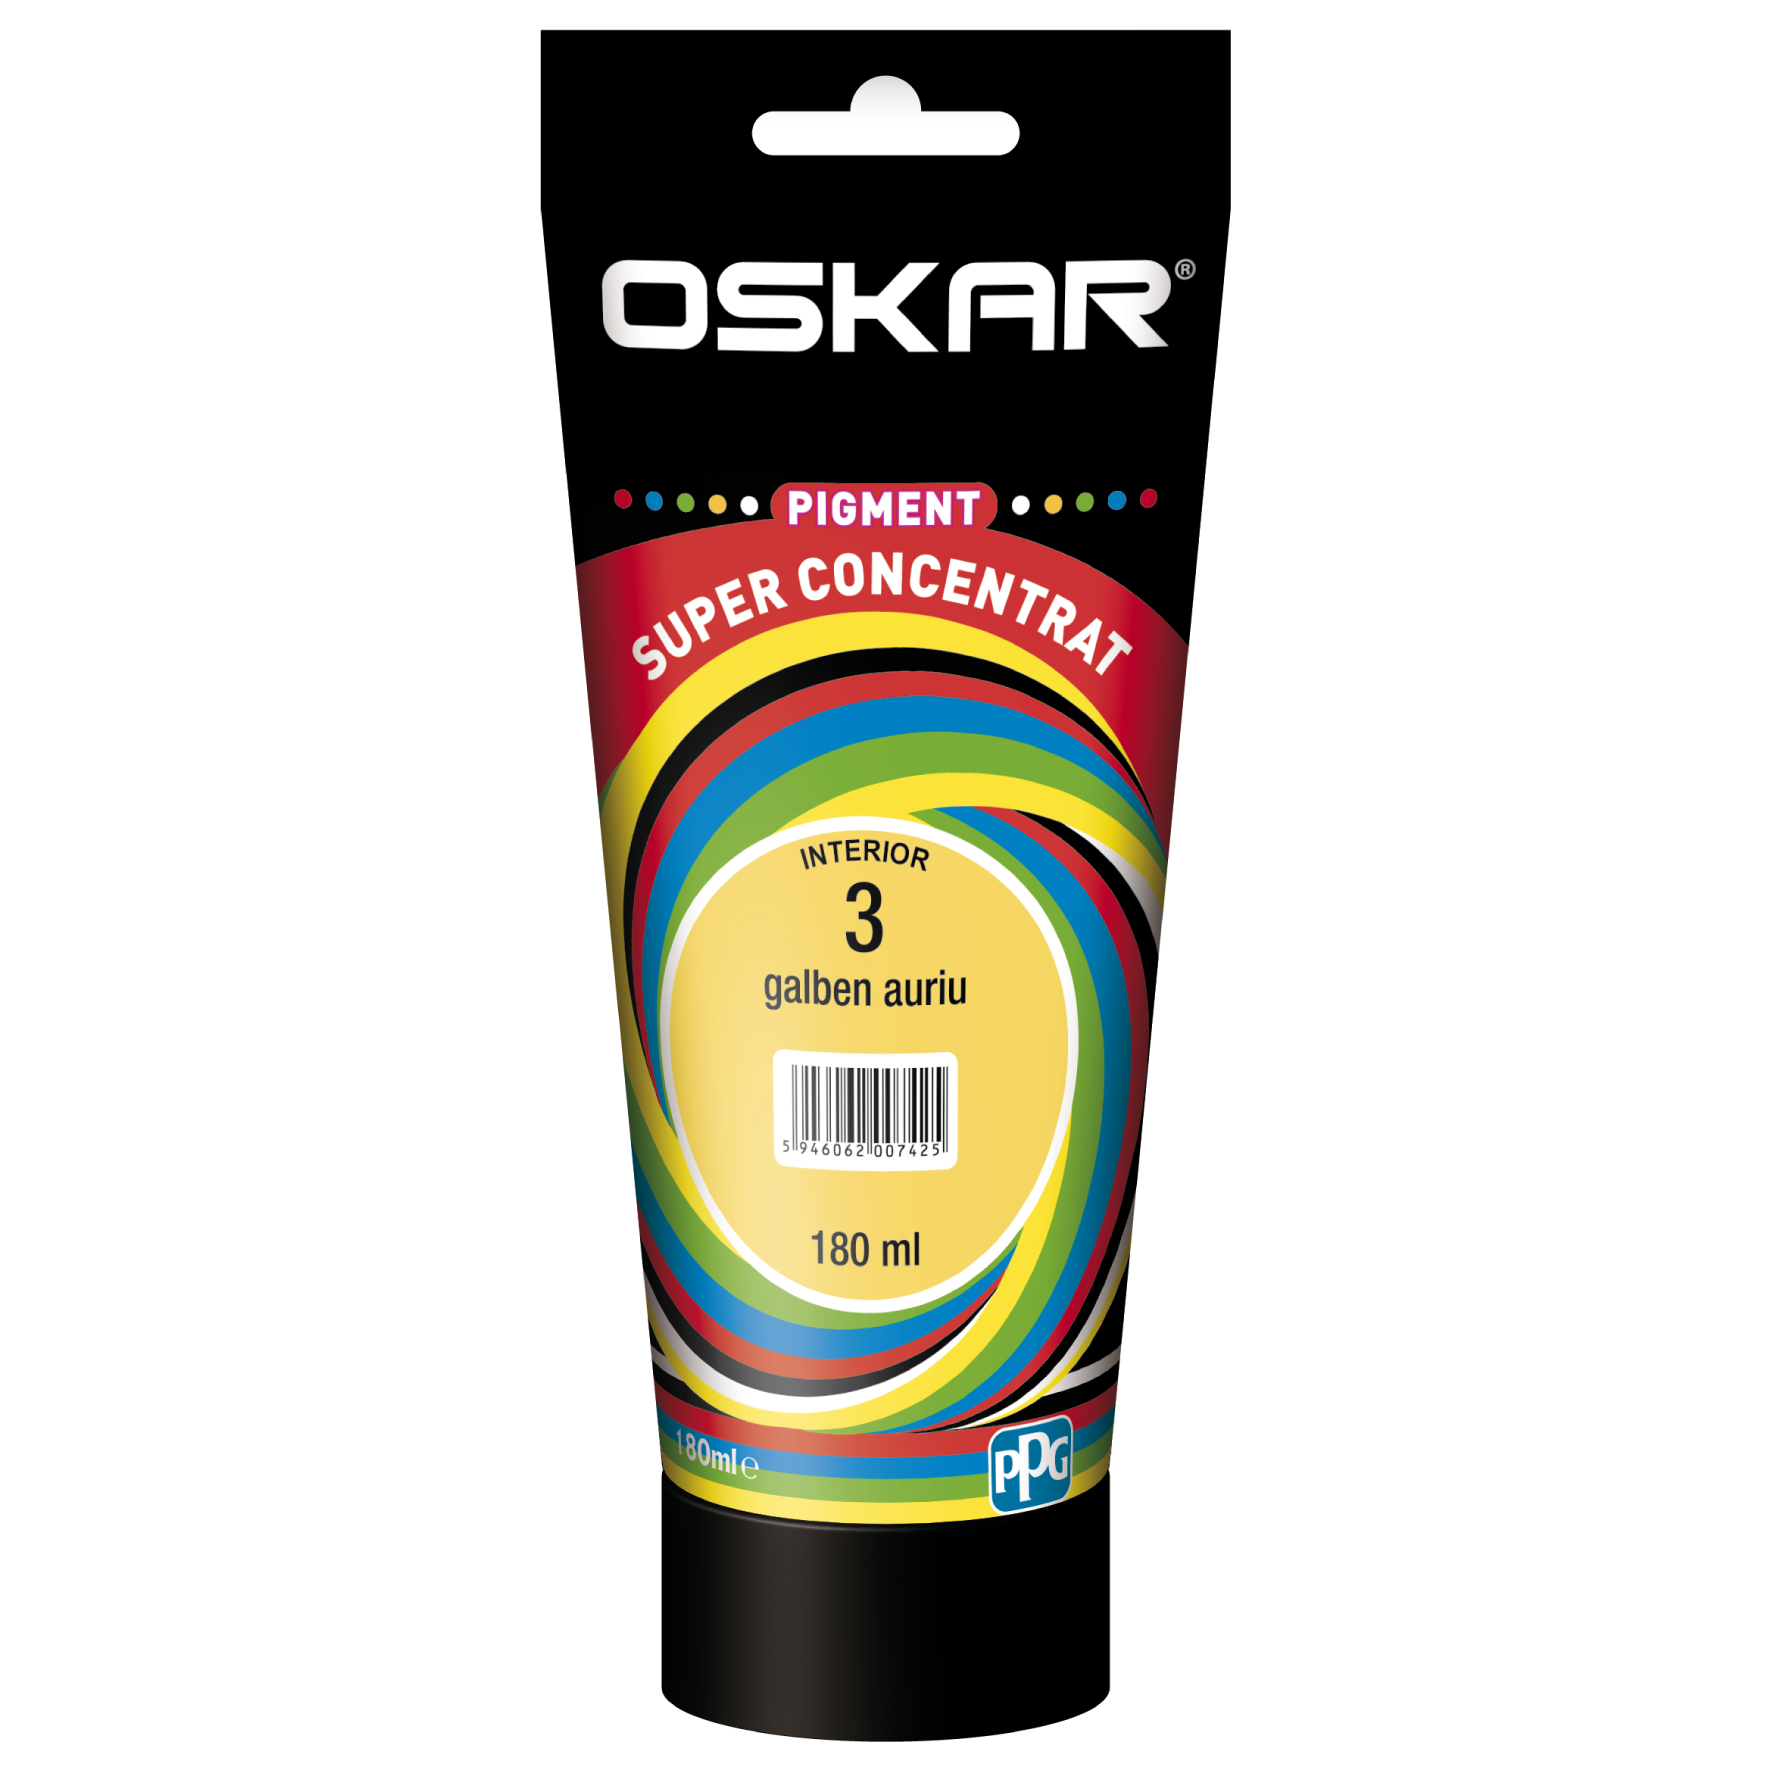 Pigment vopsea lavabila Oskar super concentrat, galben auriu 3, 180 ml 180